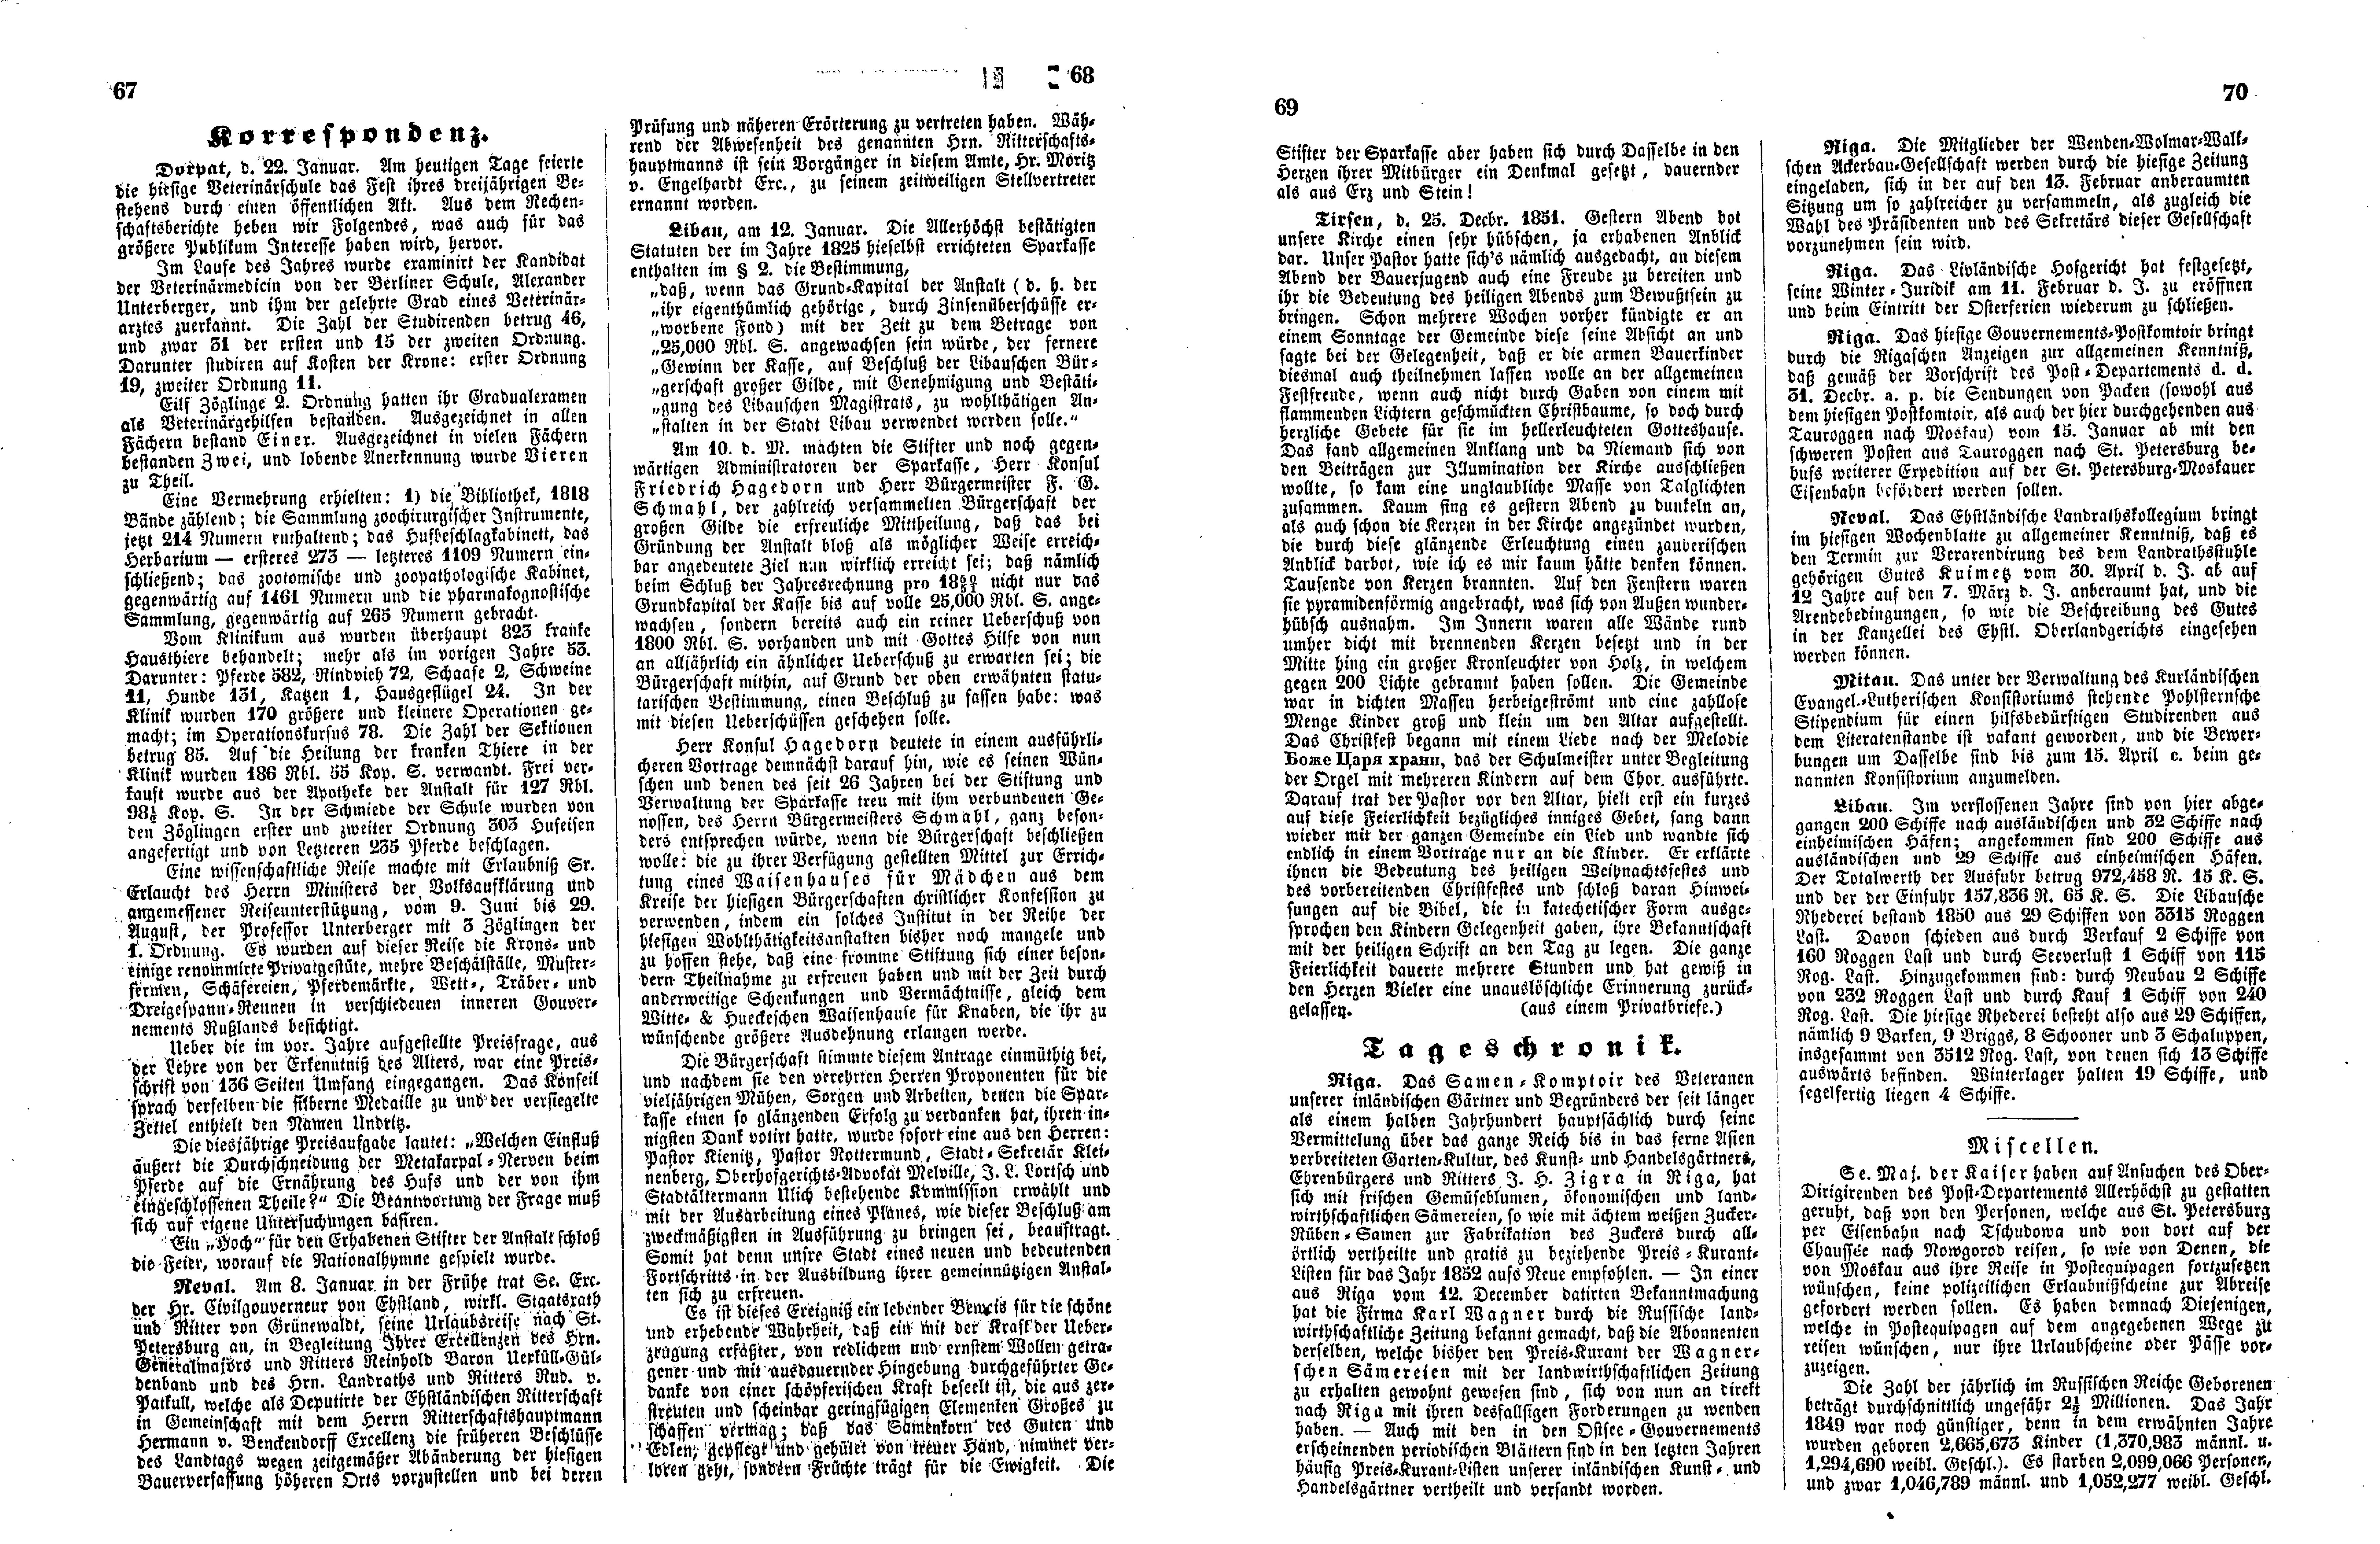 Das Inland [17] (1852) | 21. (67-70) Main body of text